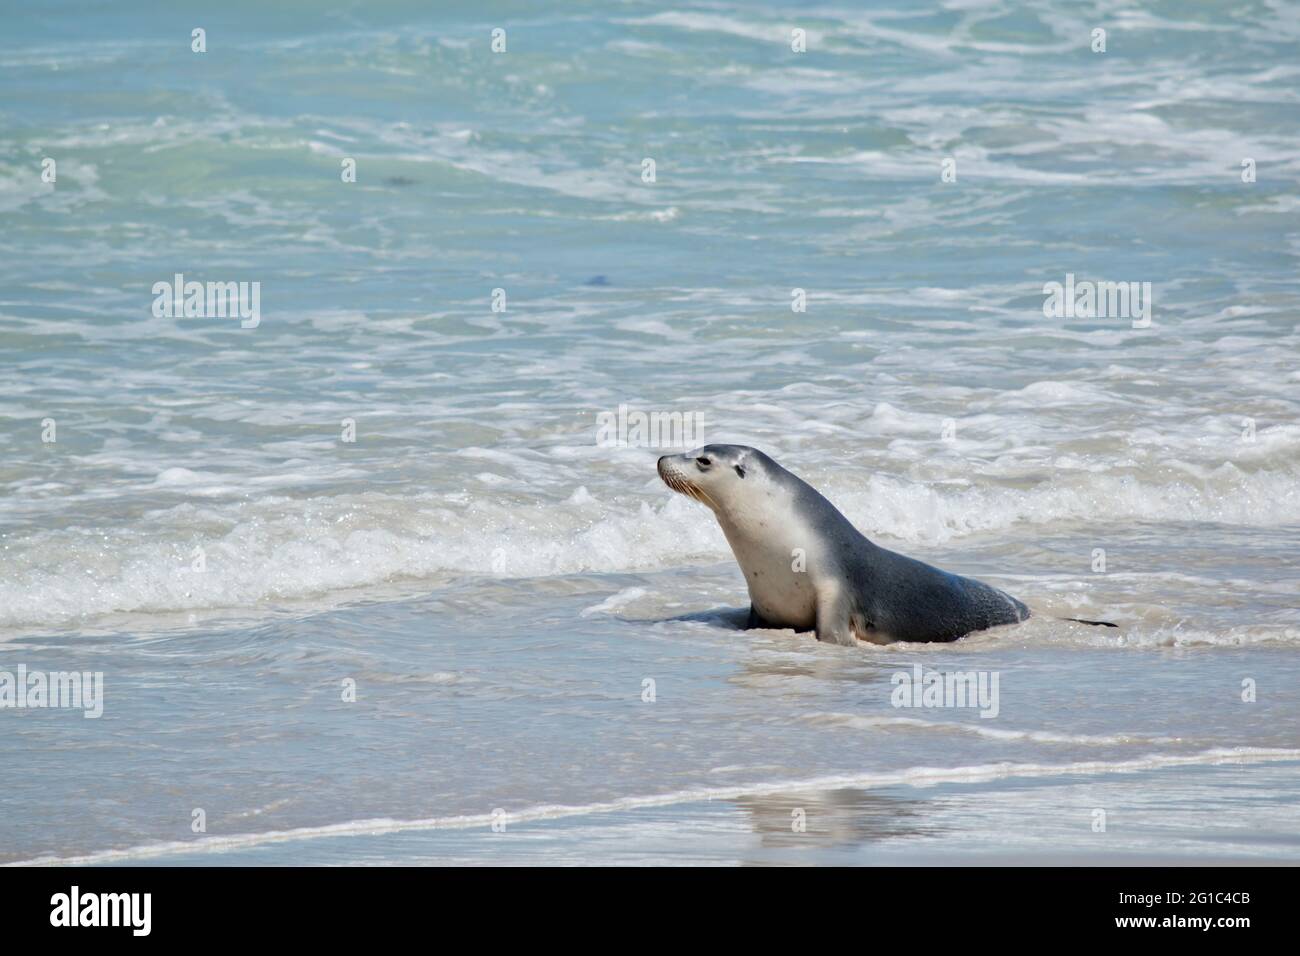 the sea lion is walking onto the beach Stock Photo